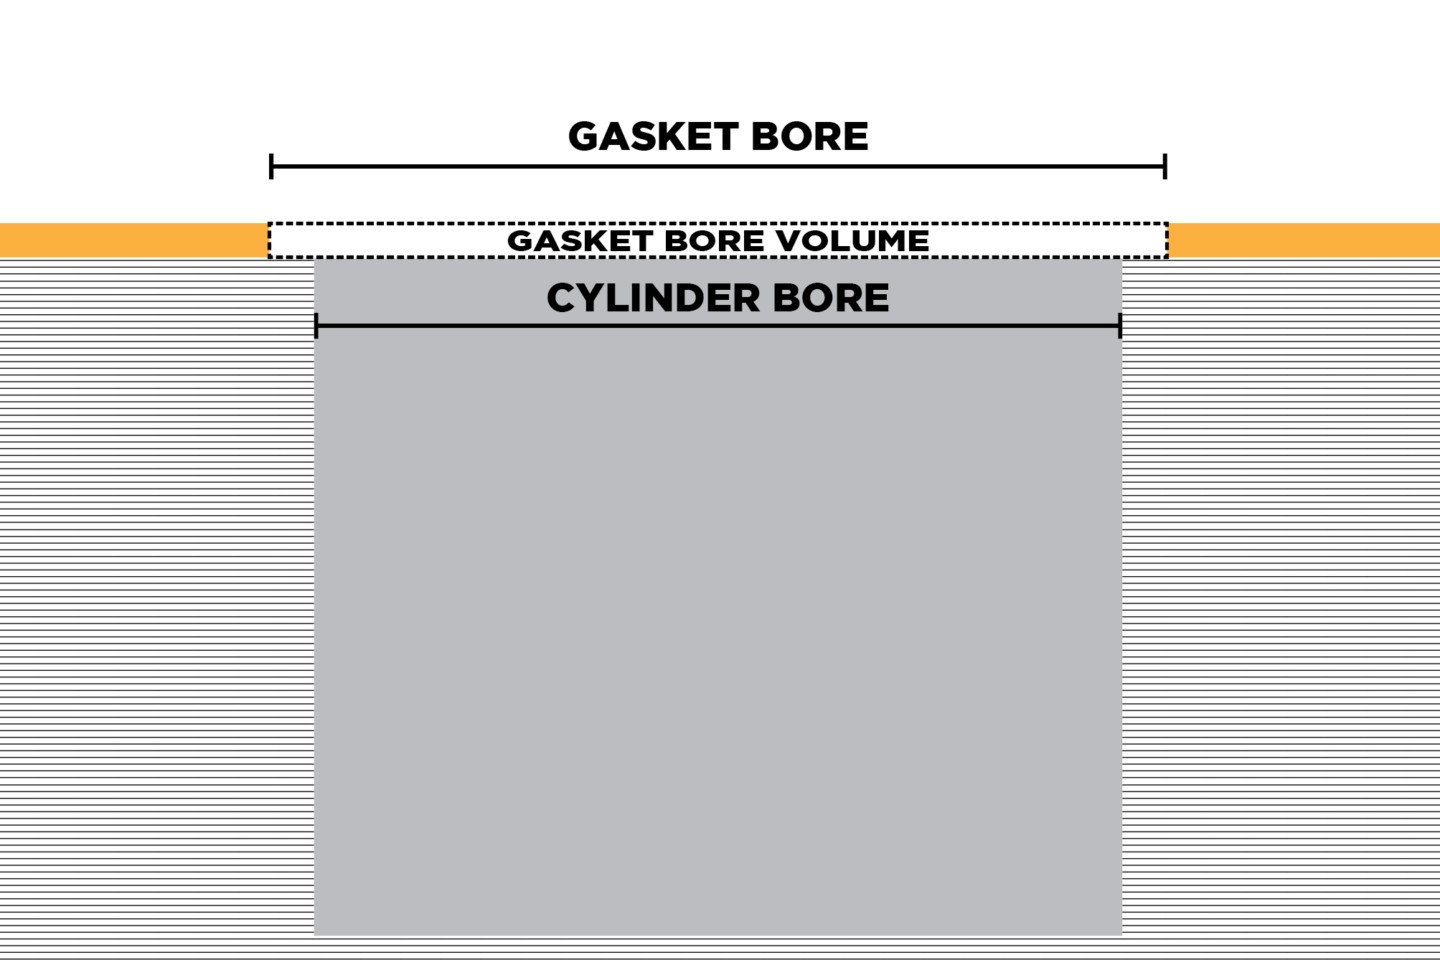 gasket bore volume